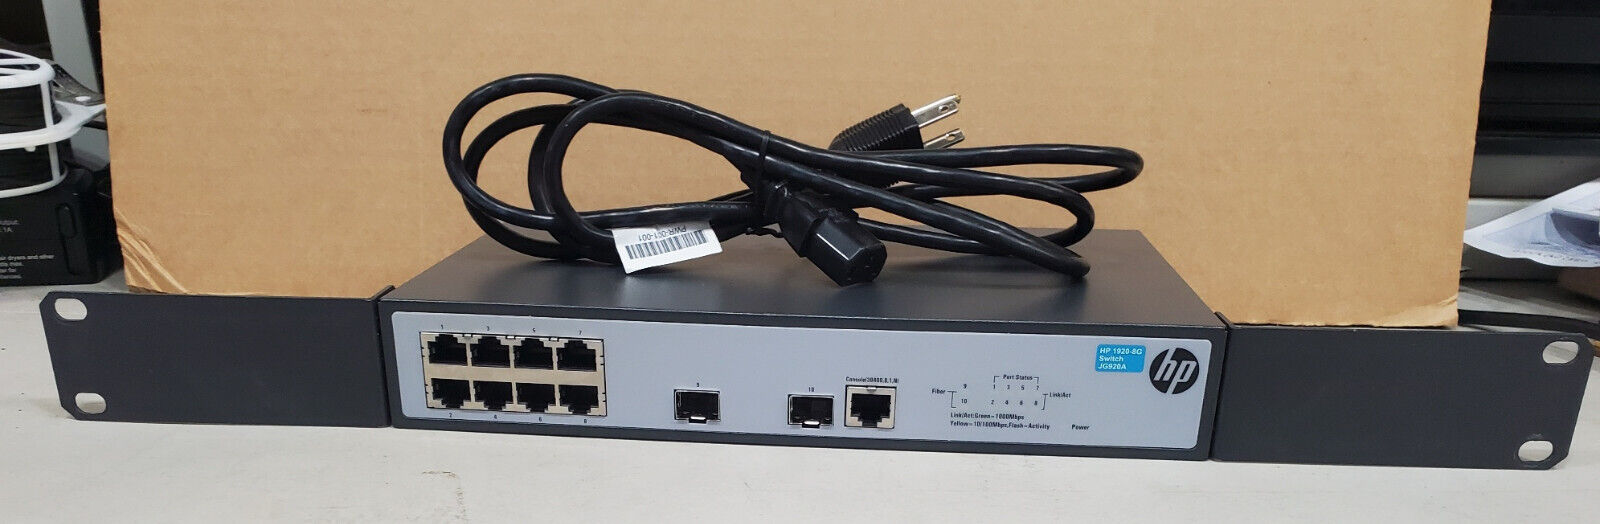 HP JG920A 1920-8G 8-Port 2-SFP Port 180W Enterprise Network Switch W/ Rack Mount